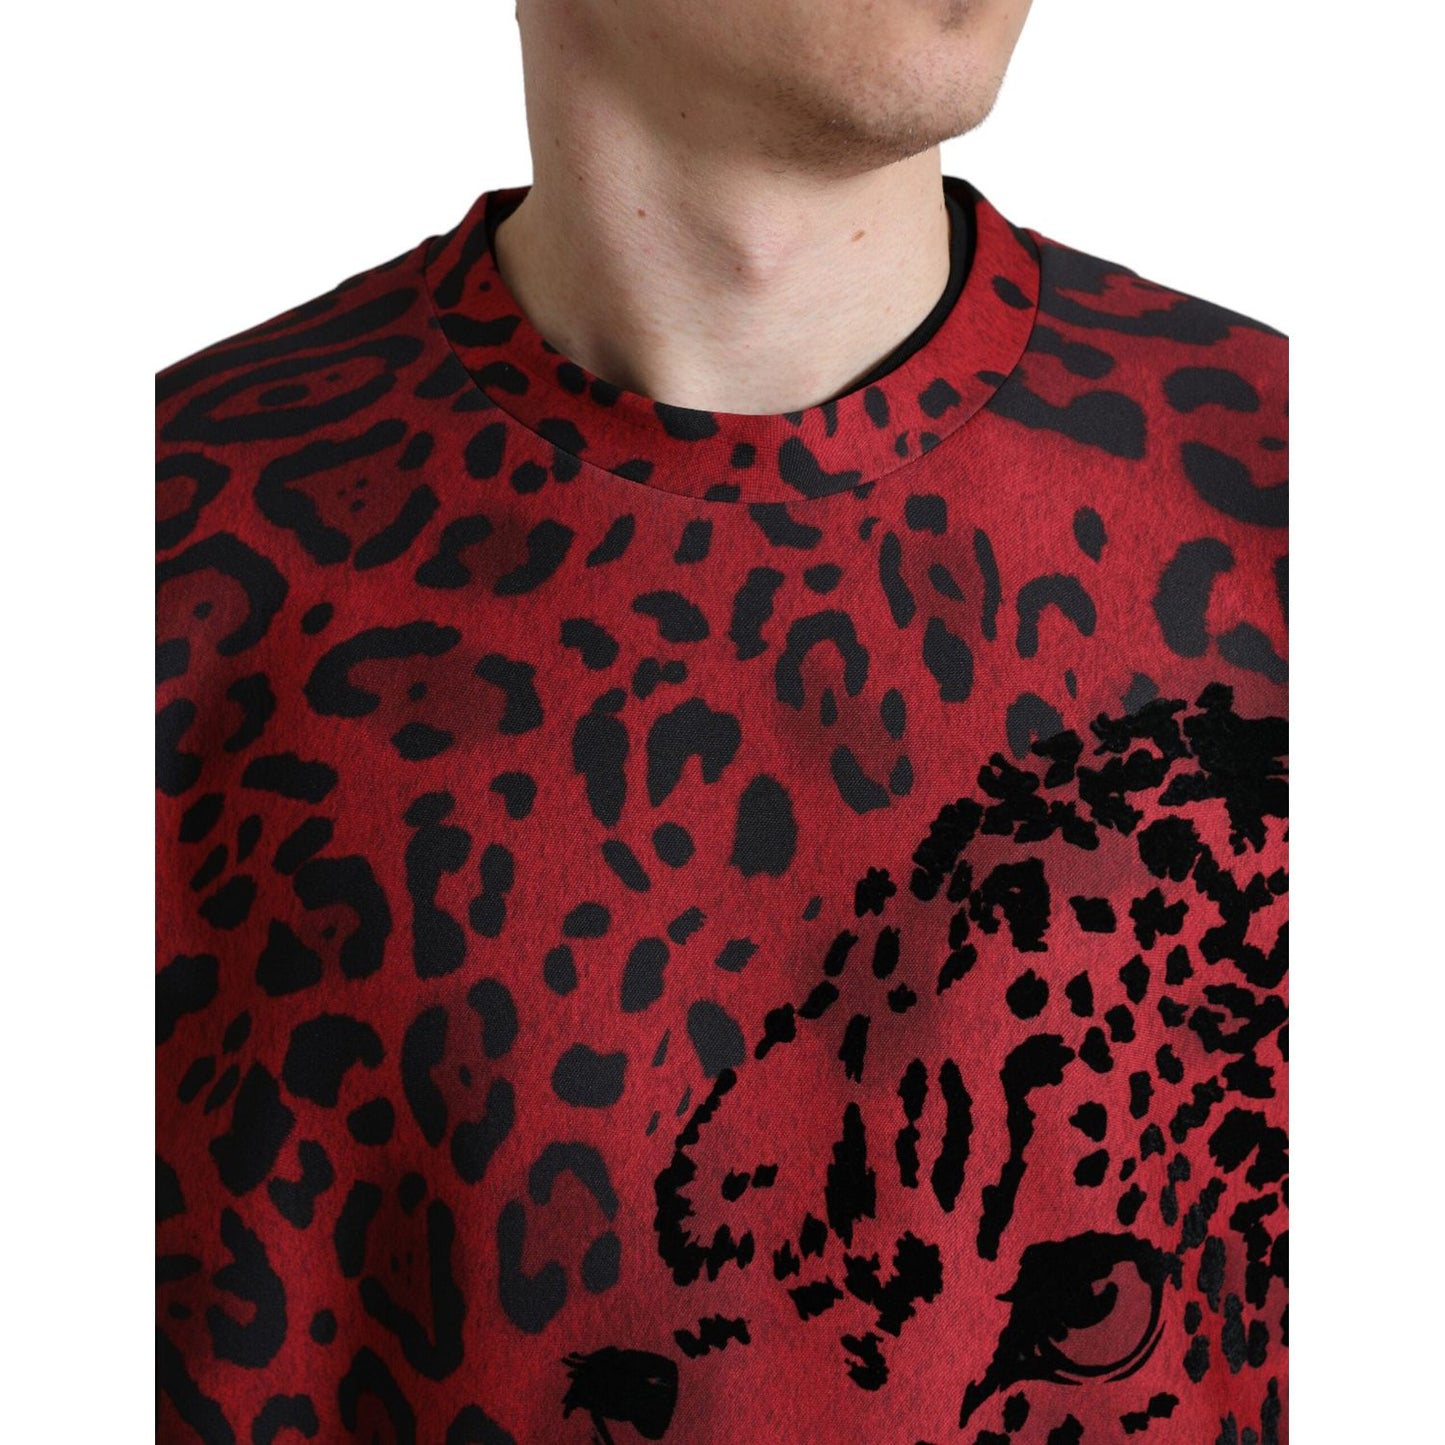 Dolce & Gabbana Elegant Leopard Print Pullover Sweater red-leopard-print-crewneck-pullover-sweater 465A1980-BG-scaled-84fd8256-177.jpg